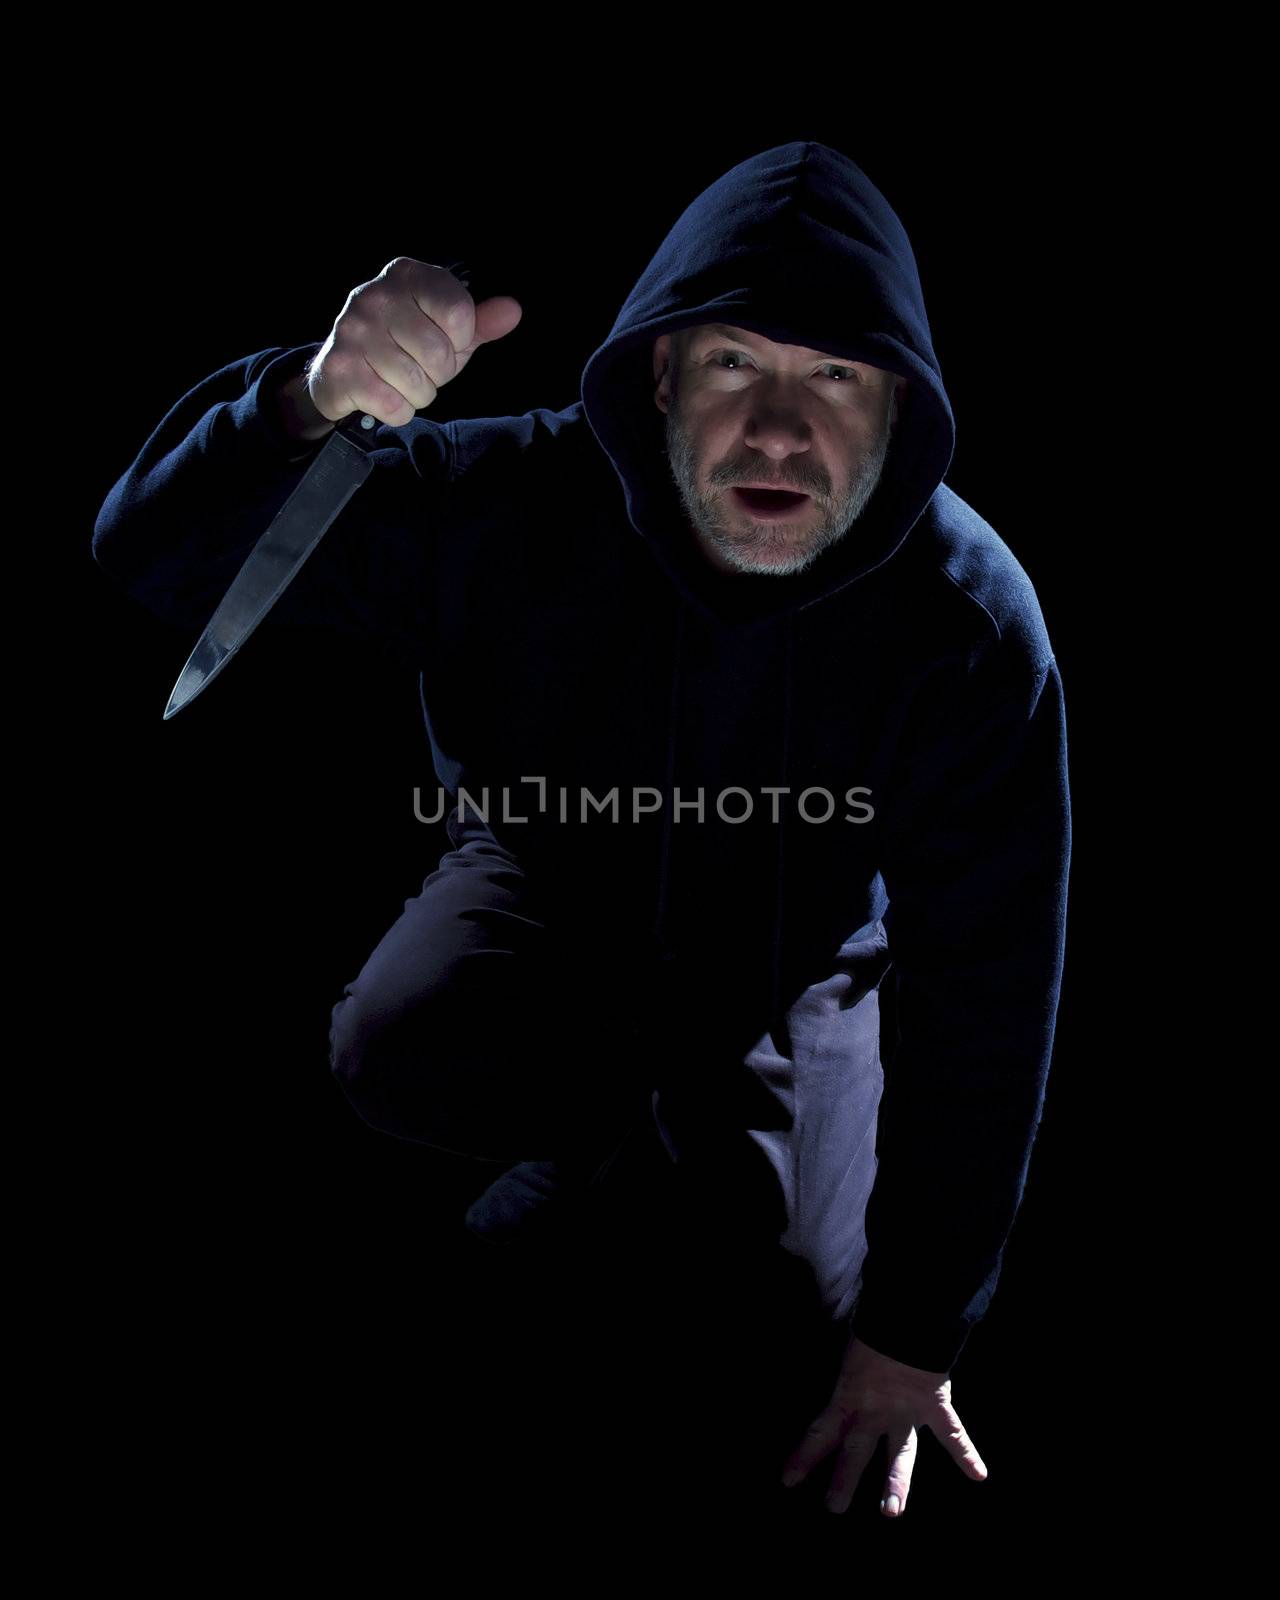 Crouching burglar with kitchen knife on black